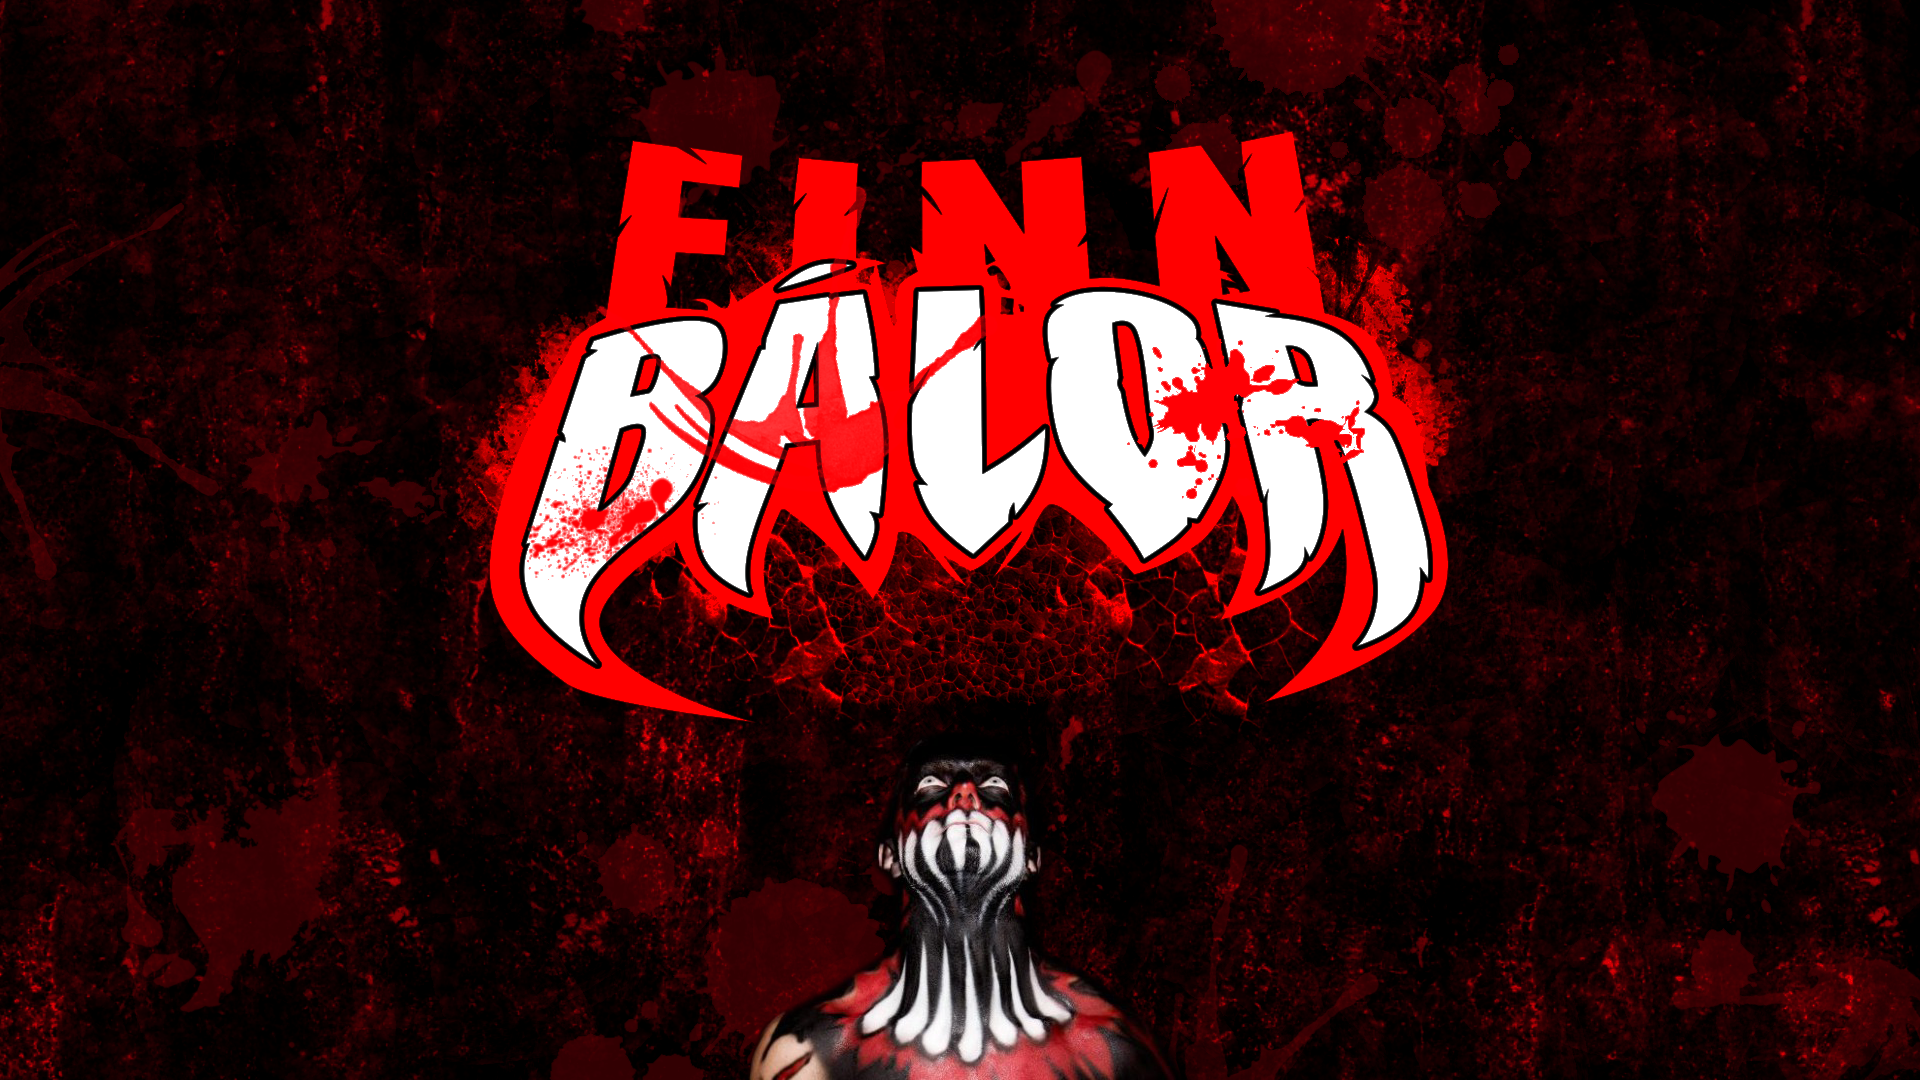 Finn Balor wallpaper by AJvstheworld  Download on ZEDGE  3e04